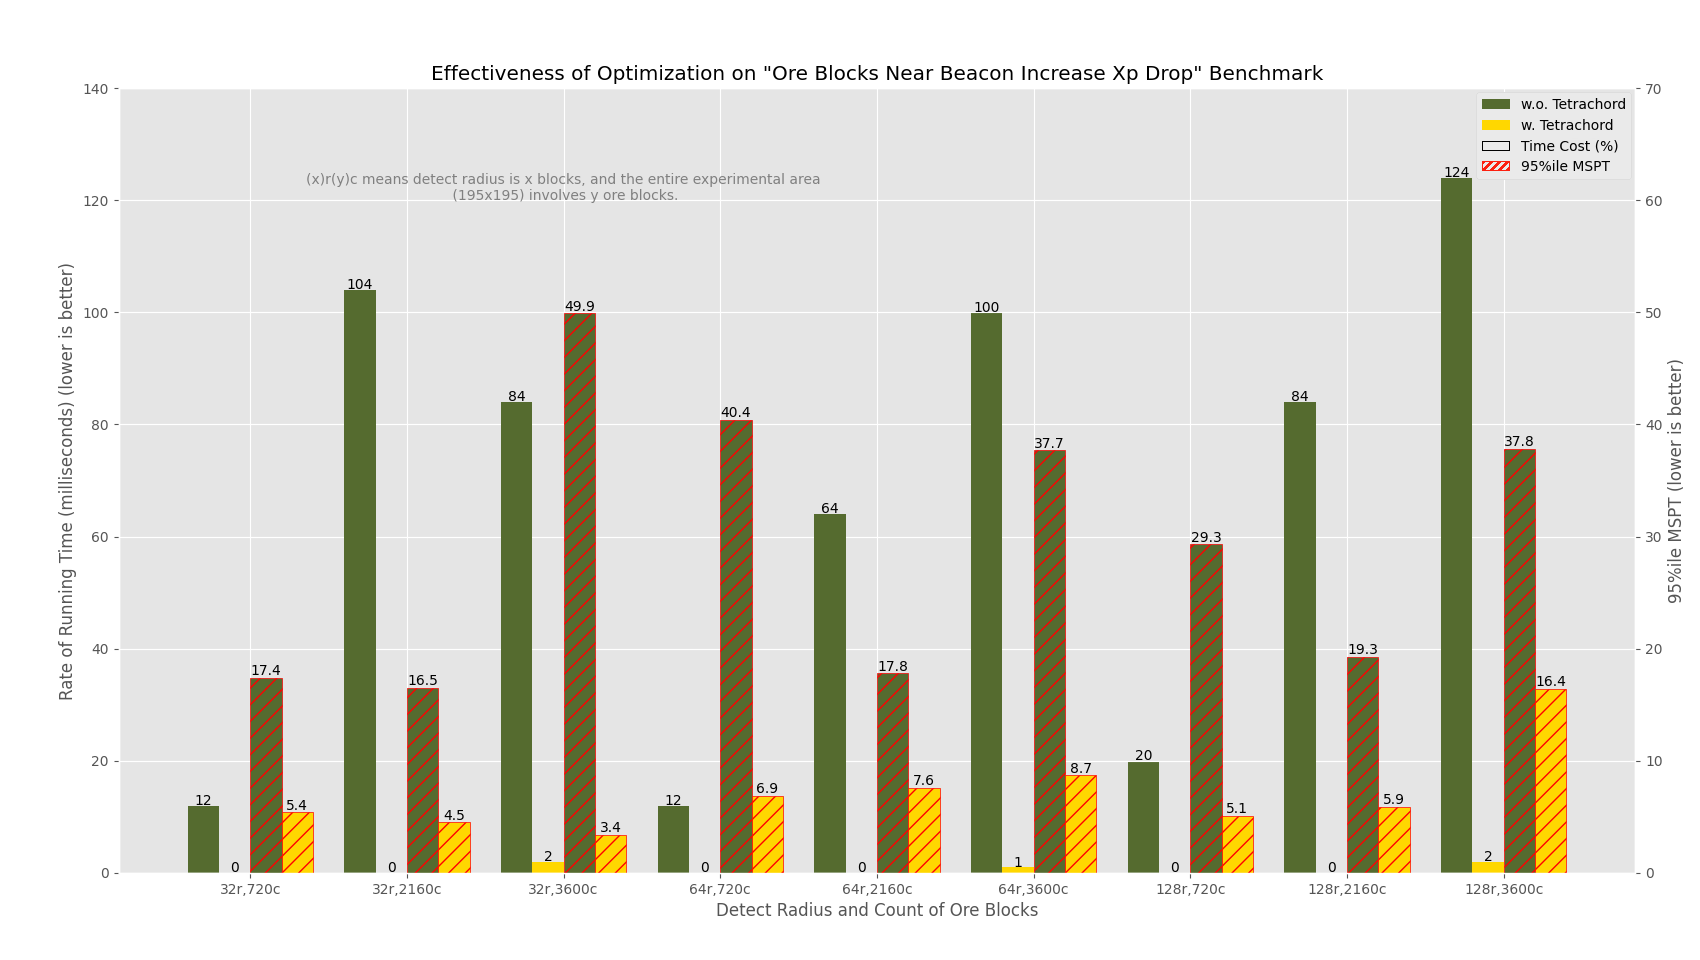 Effectiveness of Optimization on "Ore Blocks Near Beacon Increase Xp Drop" Benchmark